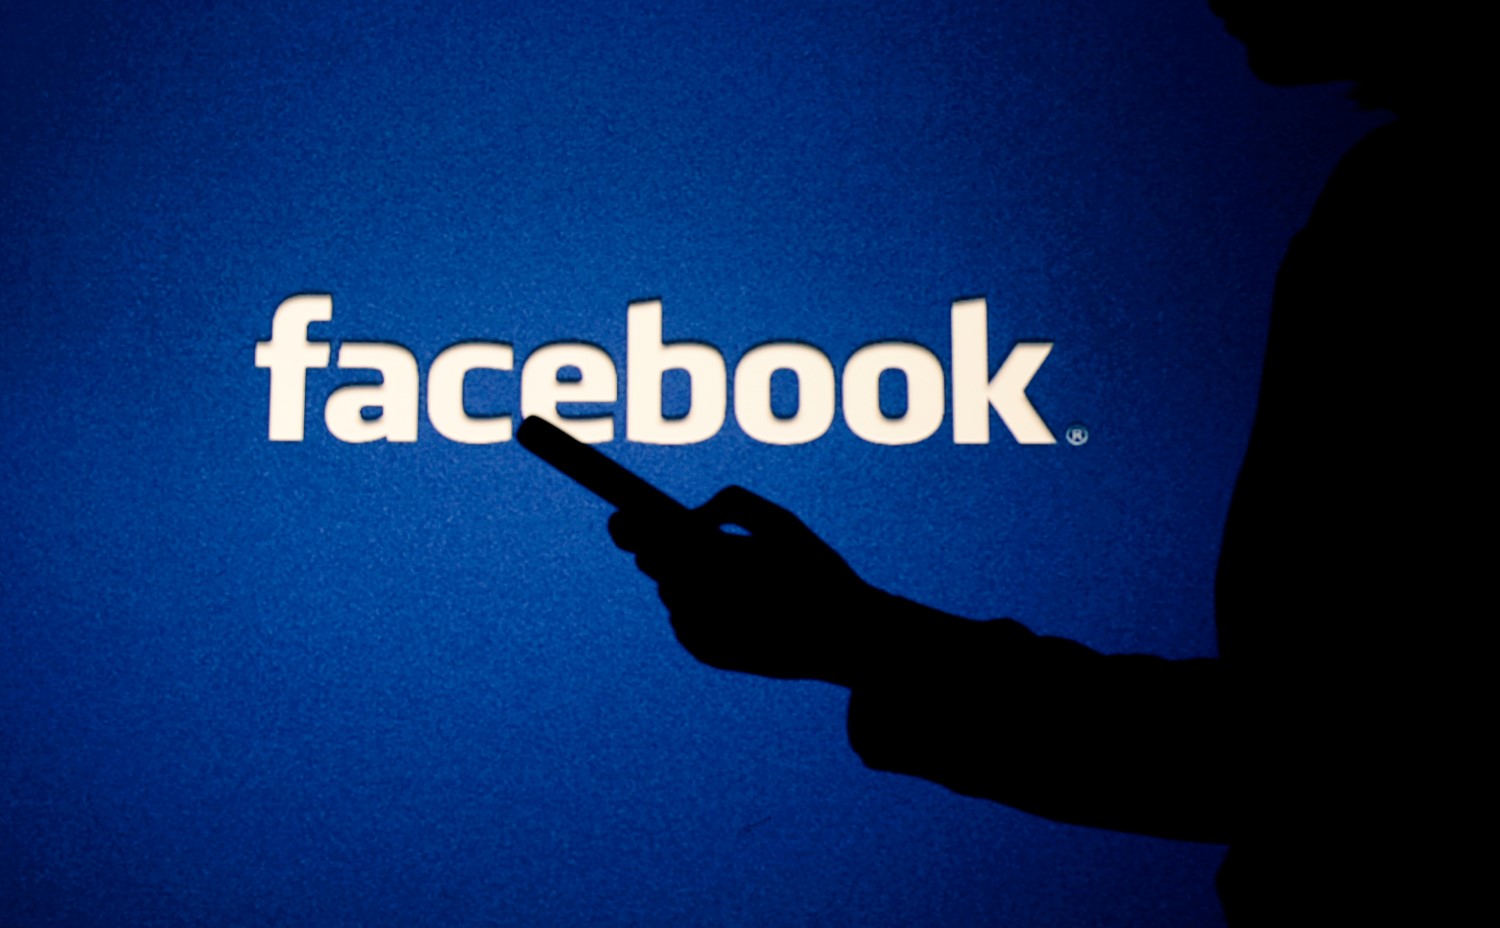 UK Regulators Want A Long Look At Libra, Admonish Facebook’s Mantra To ‘Move Fast, Break Things’